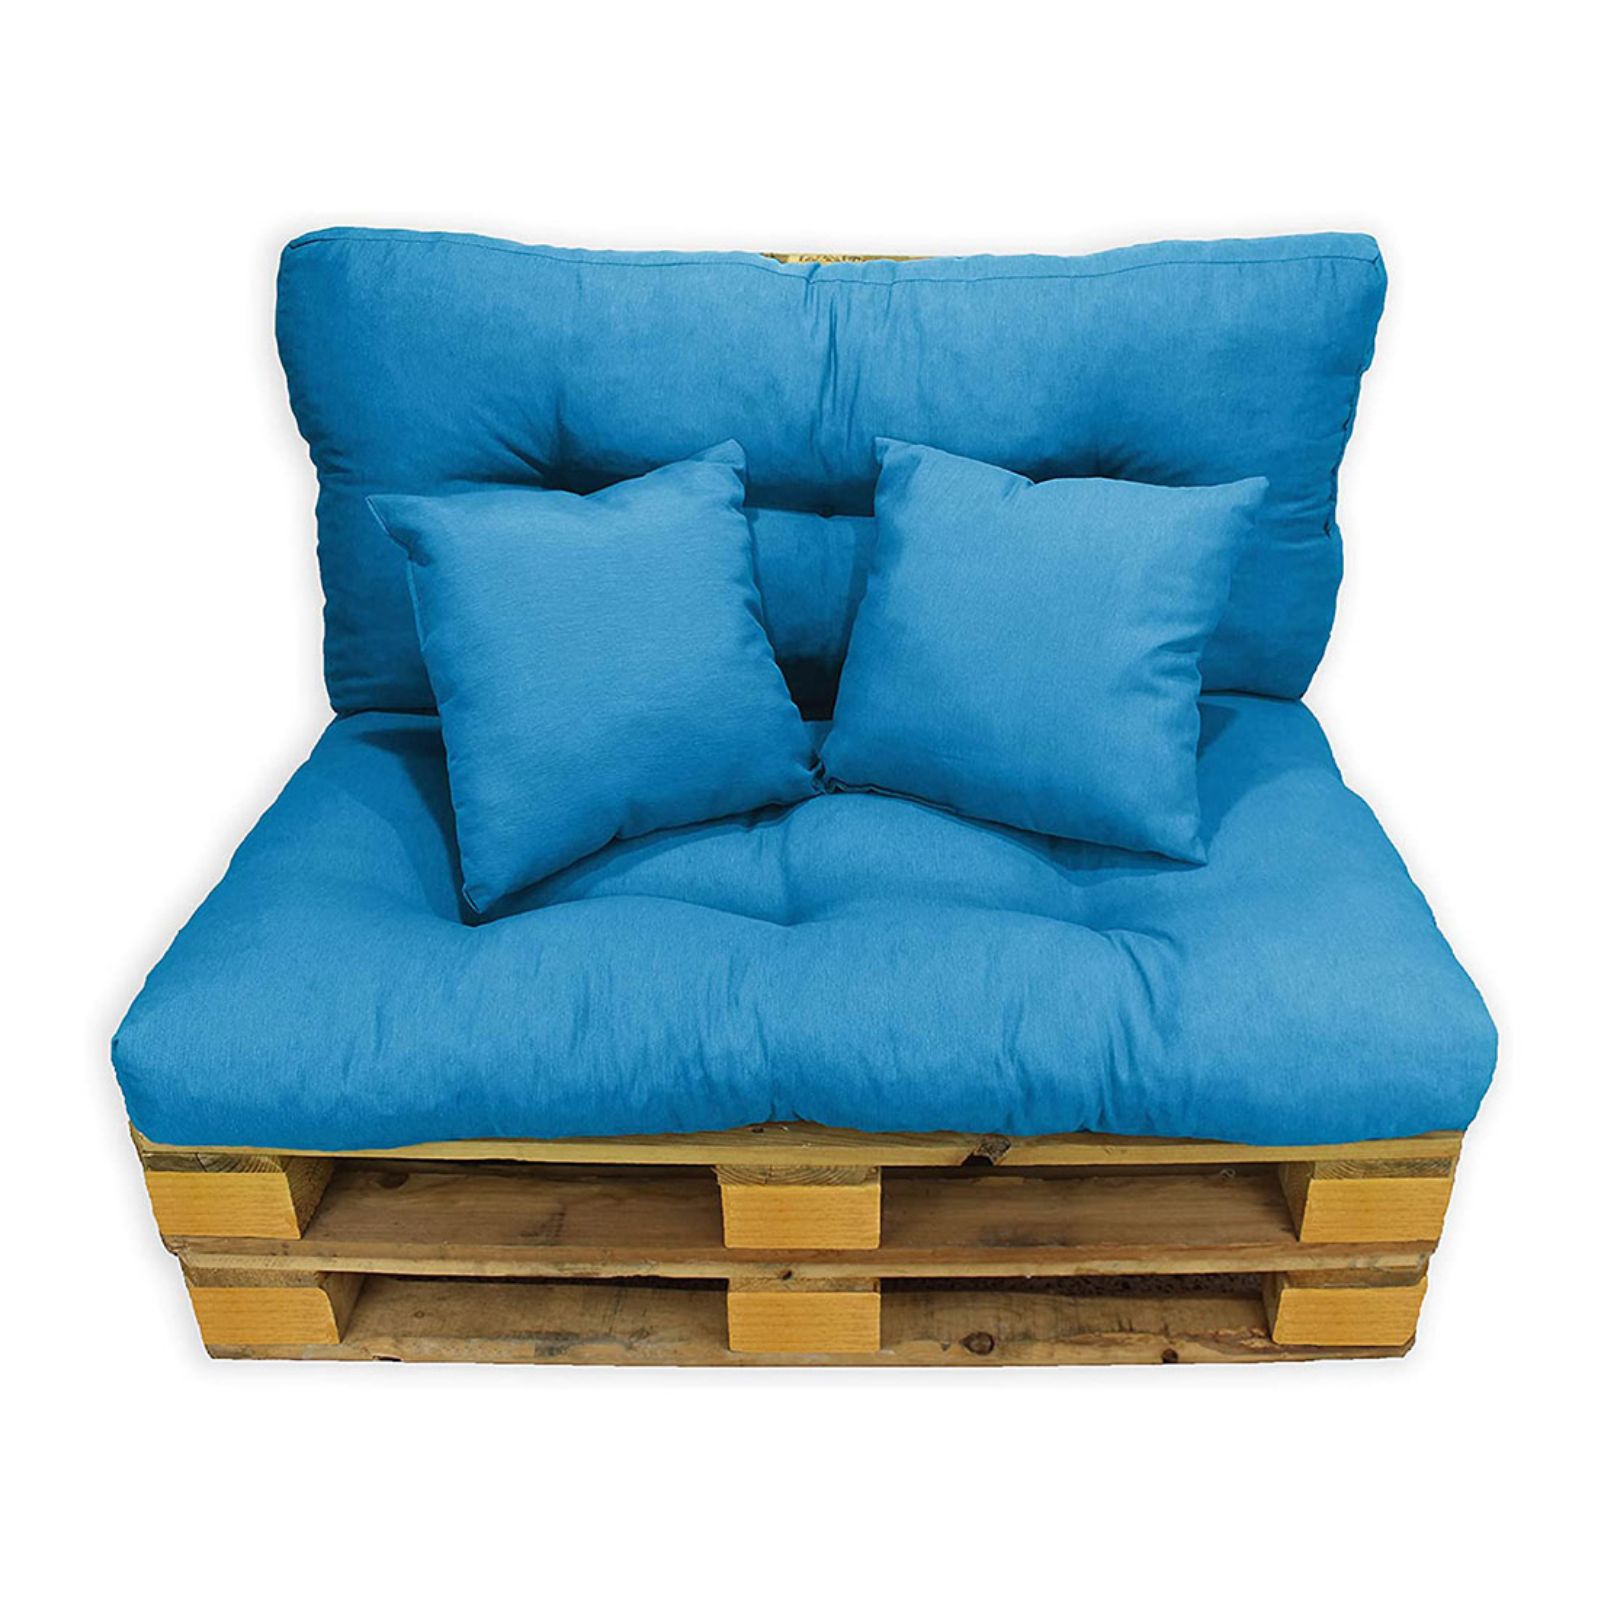 Imagen de Cojines para palets de sofá azul